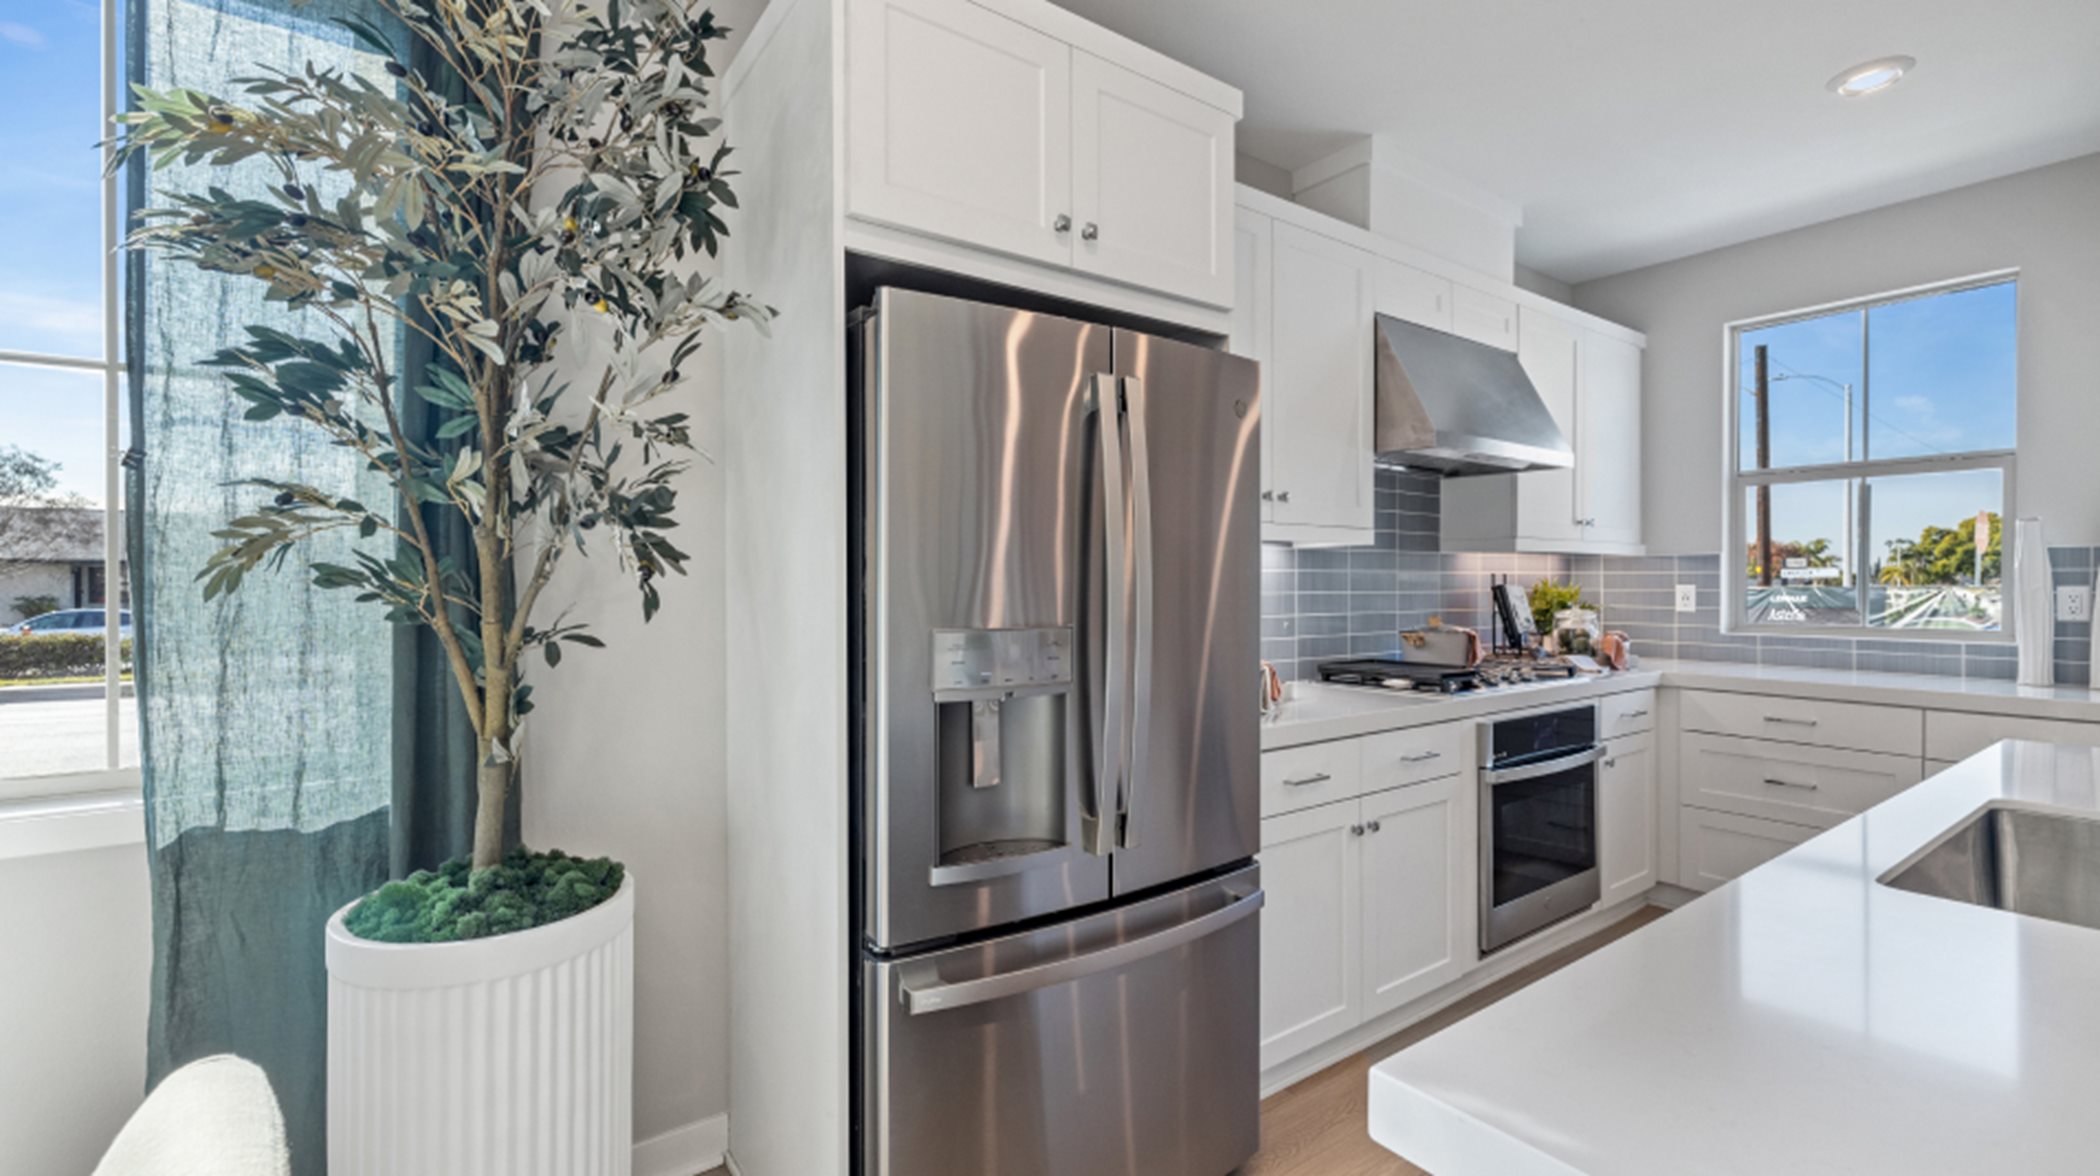 Kitchen image with focus on fridge